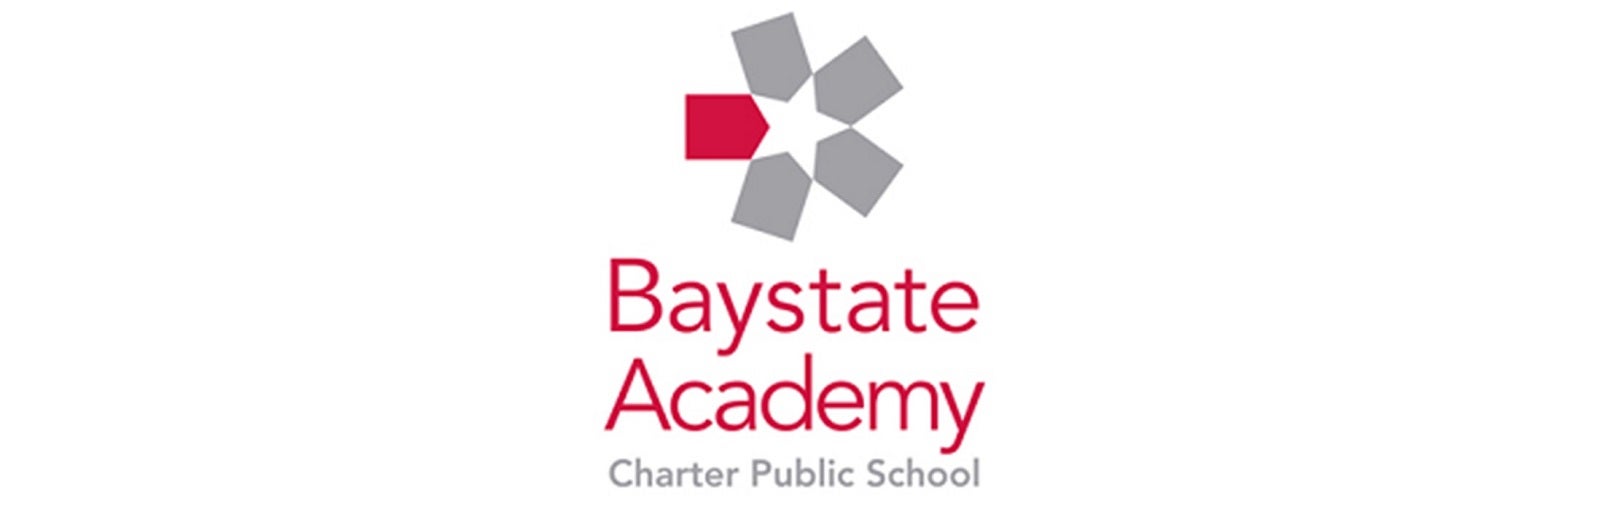 Baystate Academy Charter School Graduation